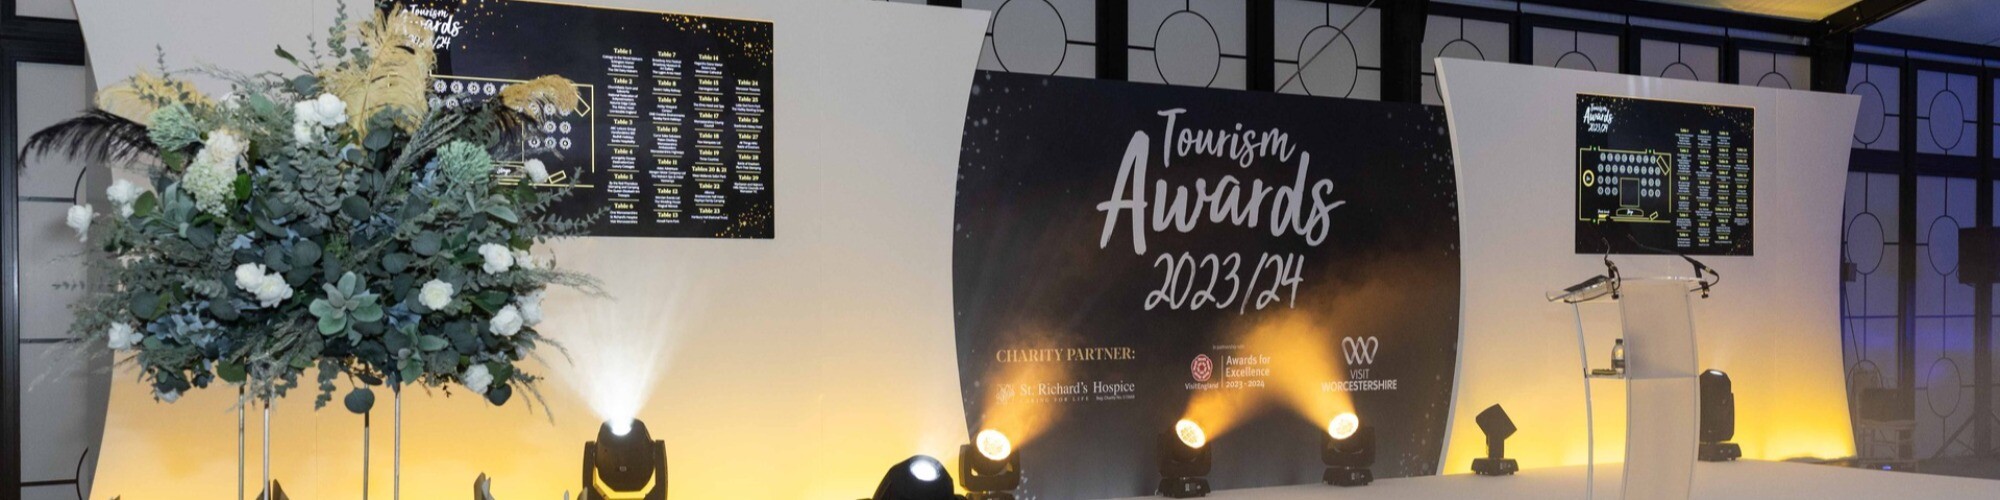 Aztec Adventure finalist in the Visit Worcestershire Tourism Awards 2023/24